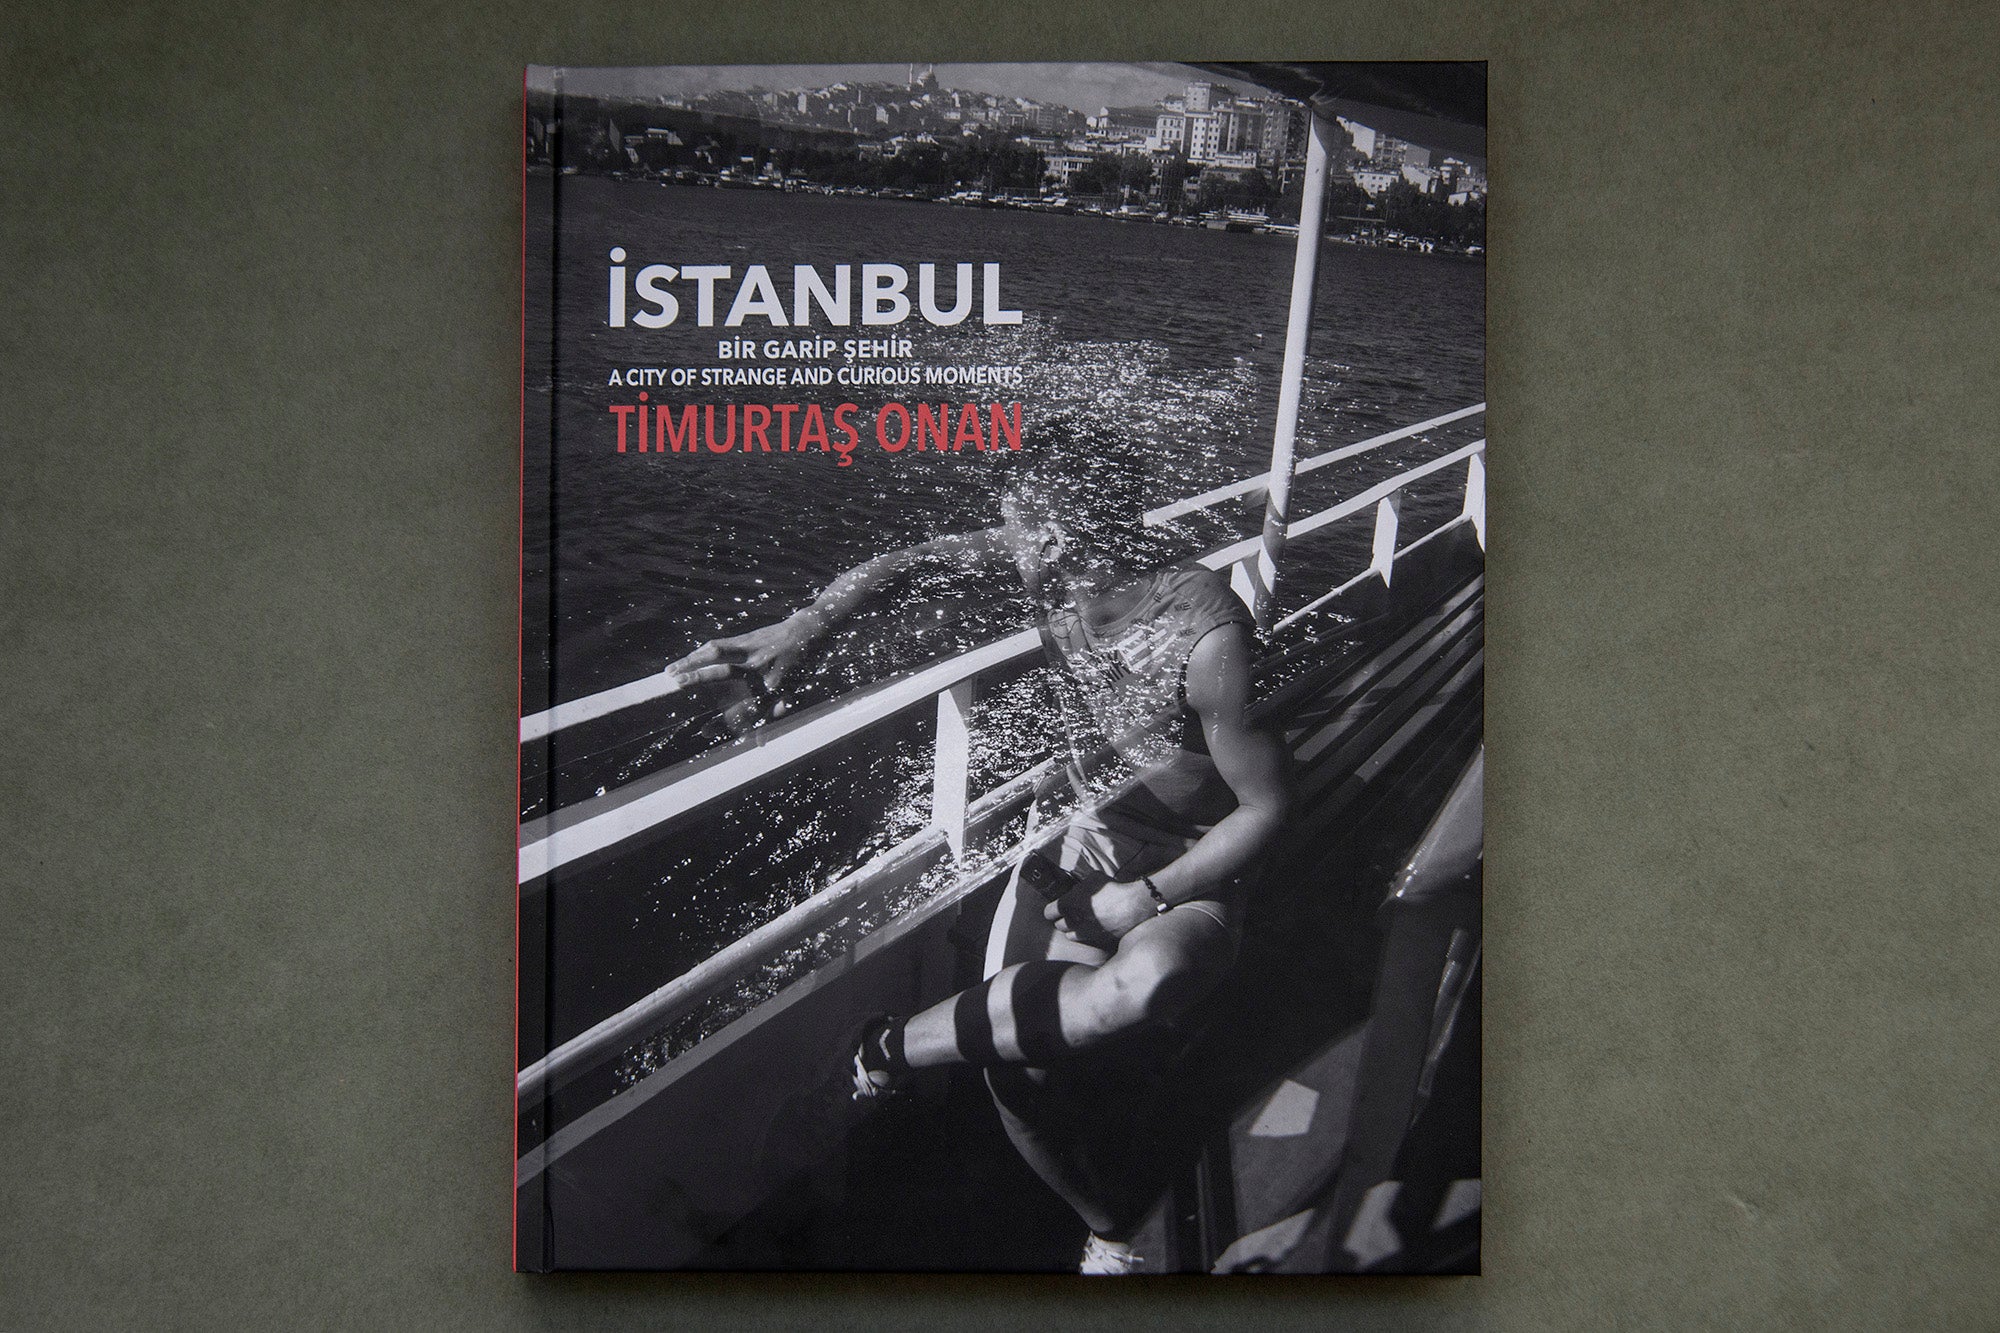 “İstanbul Bir Garip Şehir" - Timurtaş Onan 